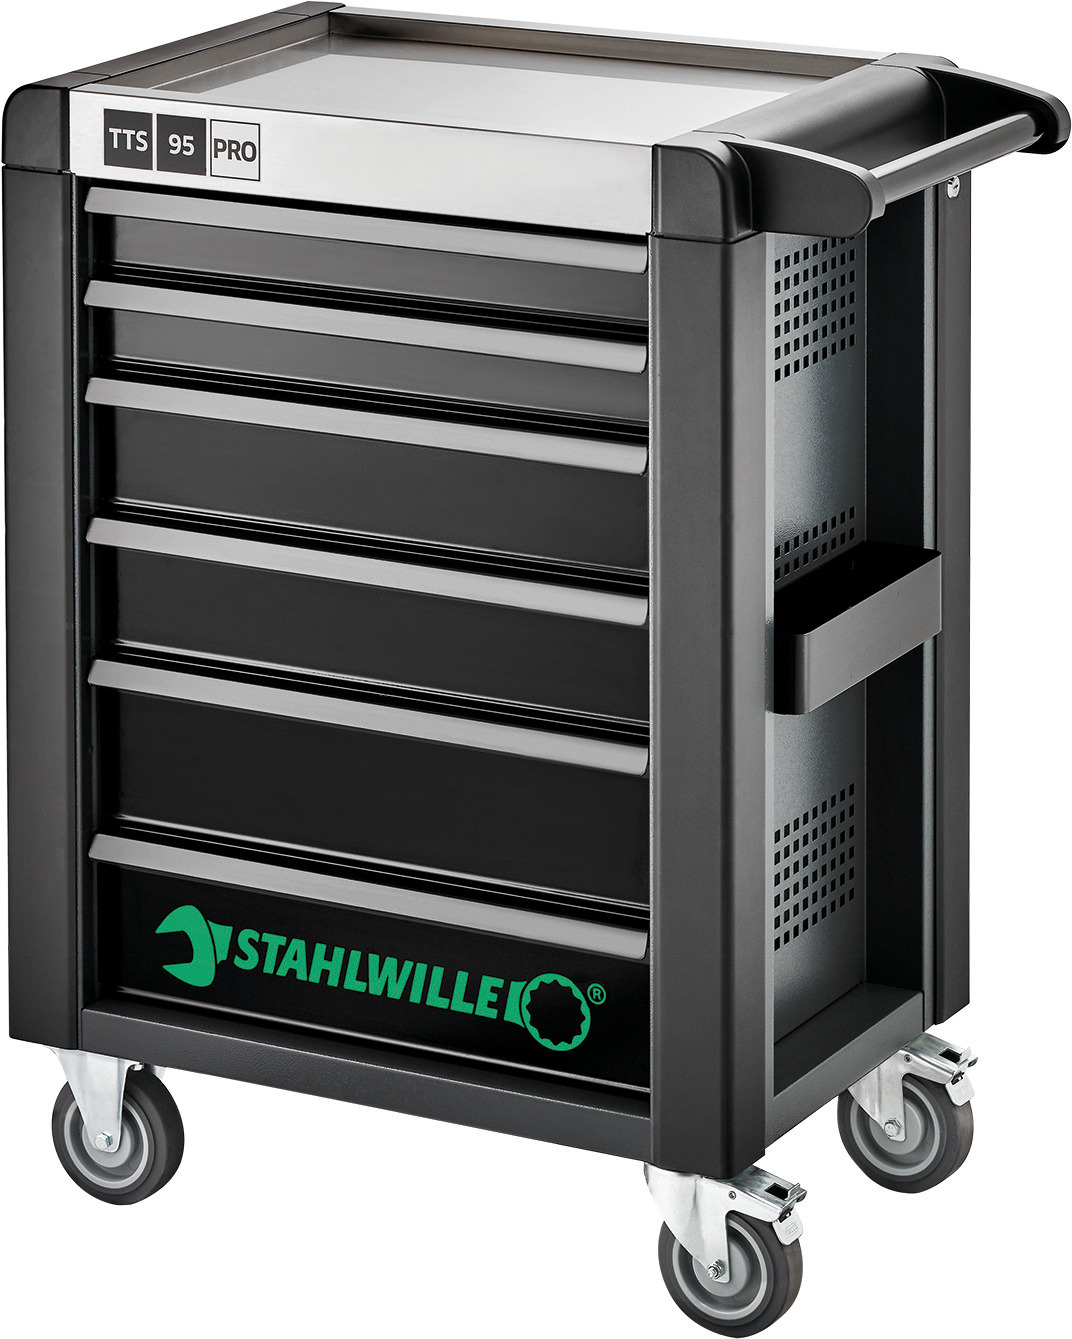 STAHLWILLE - Valigia trolley per utensili VDE 3 scomparti - VUOTA -  Stahlwille 81620700